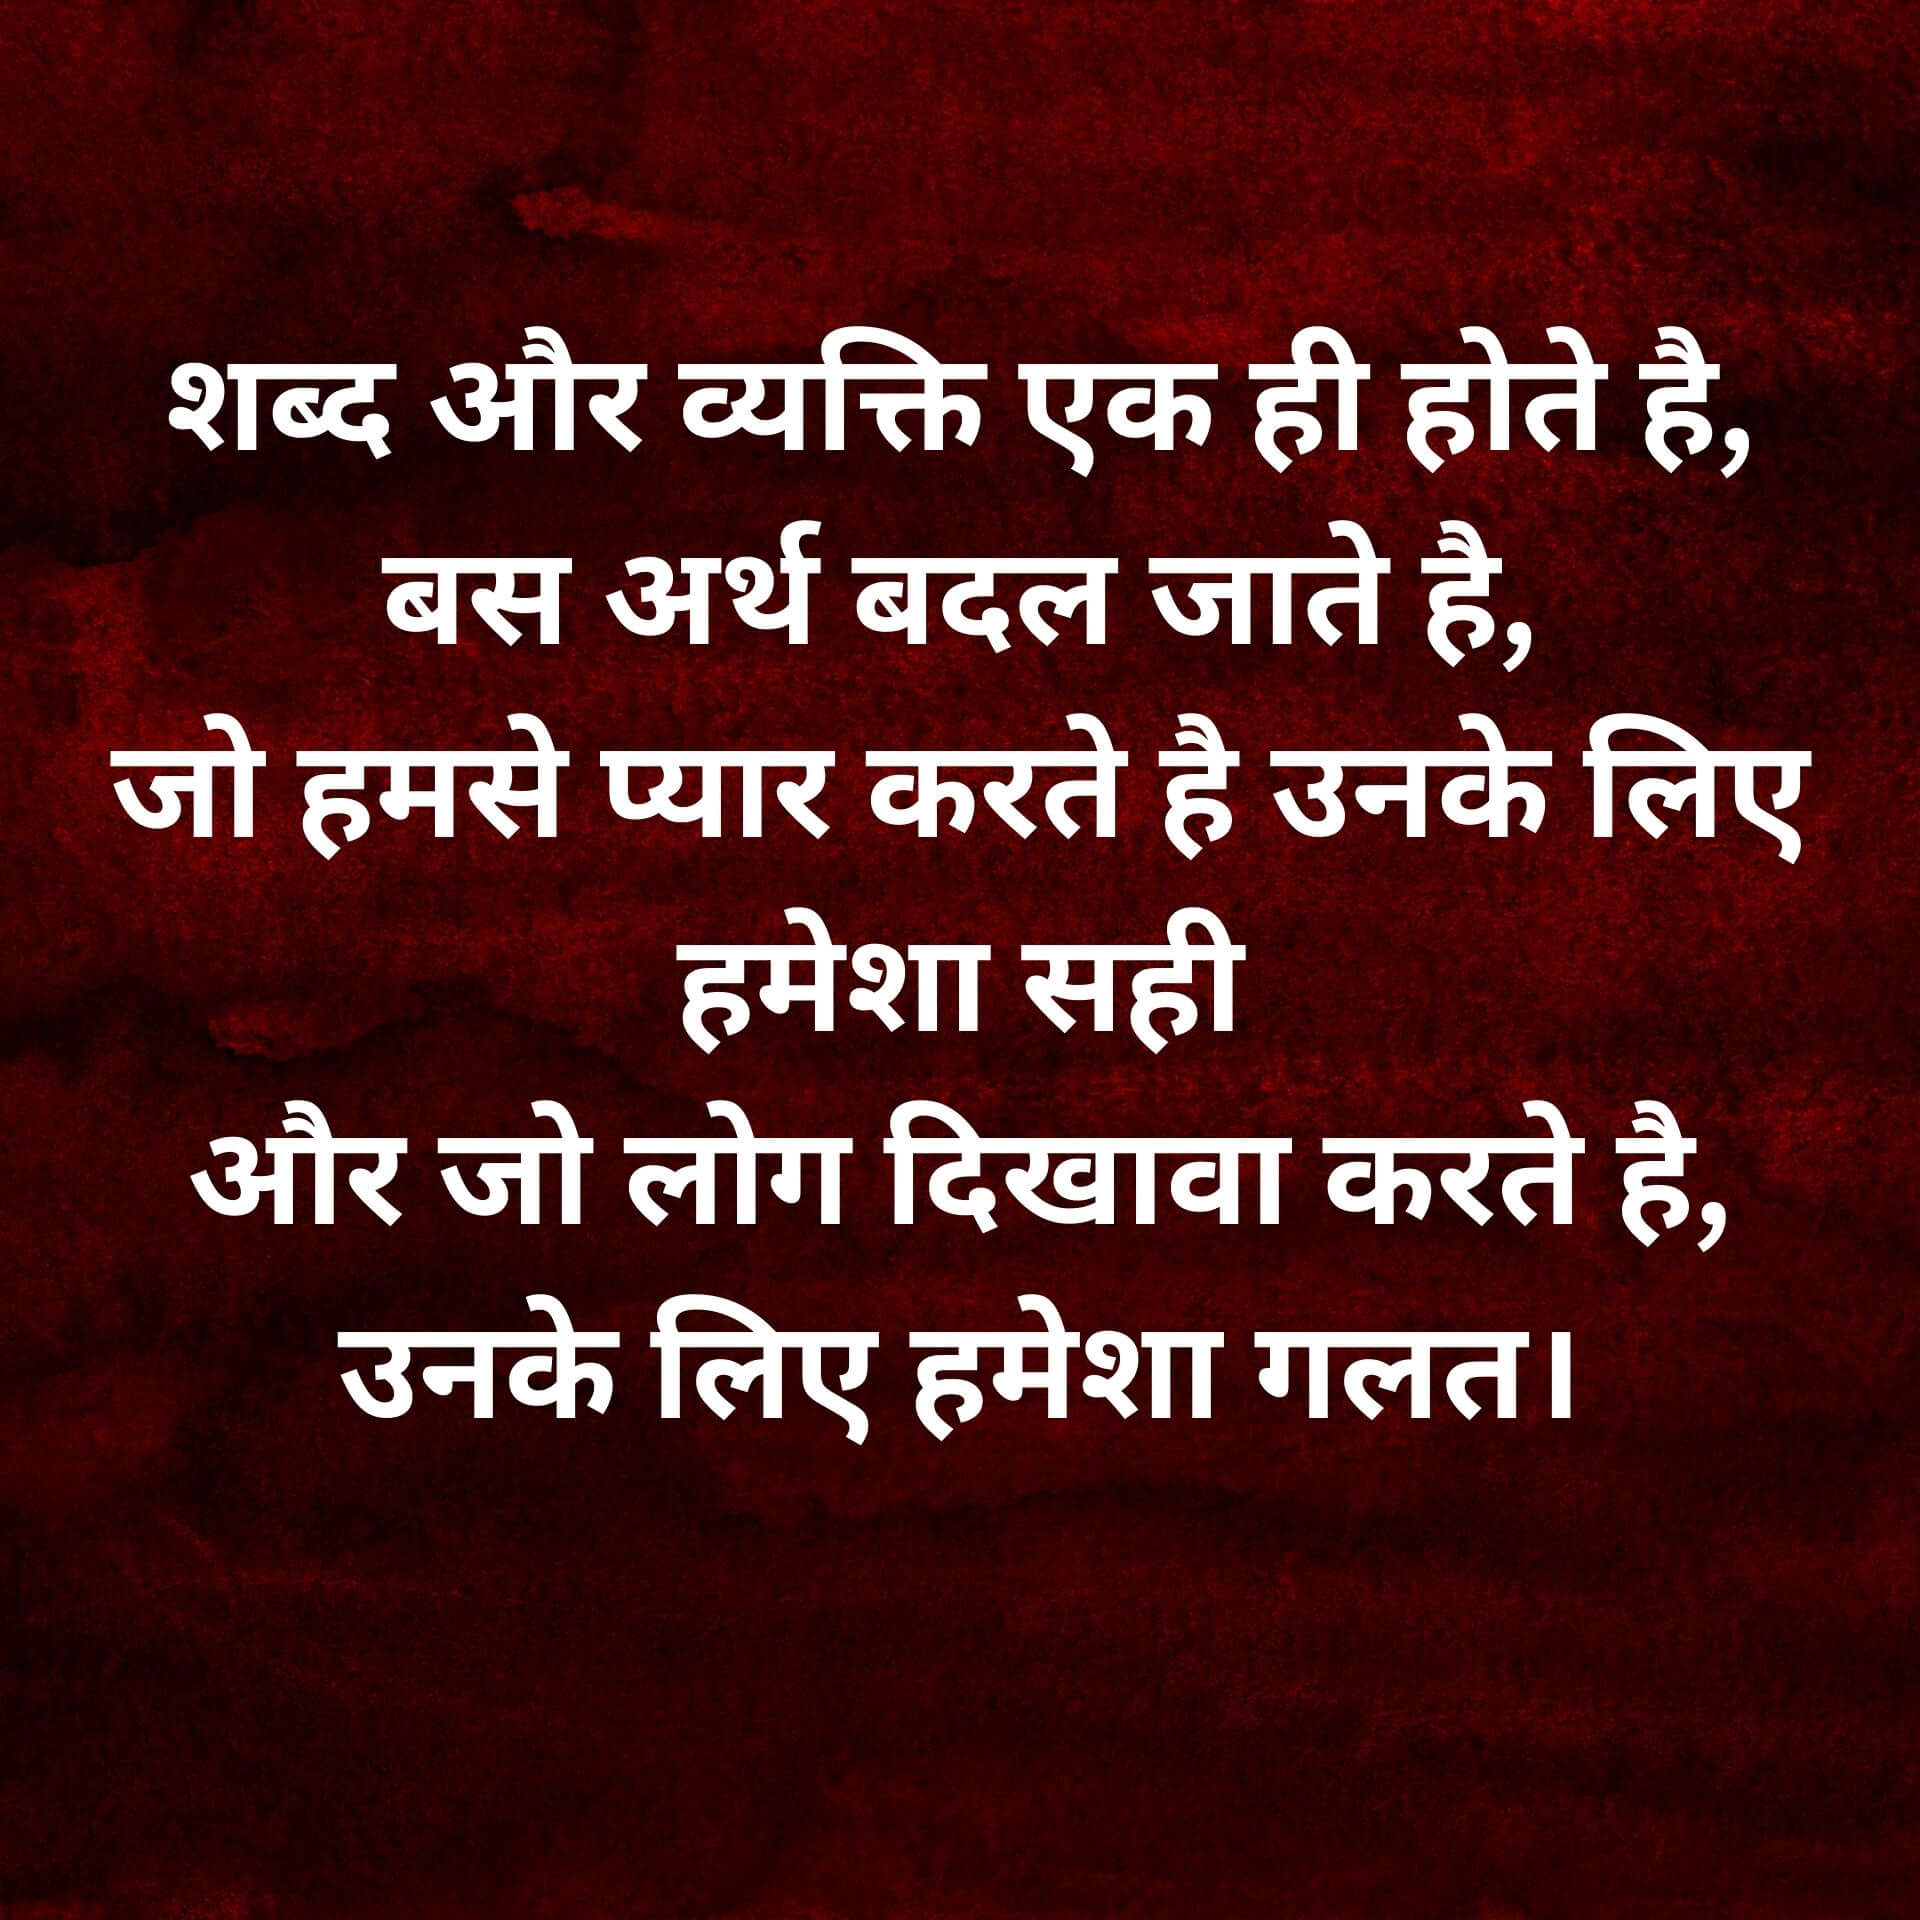 Hindi inspirational quotes Wallpaper Download